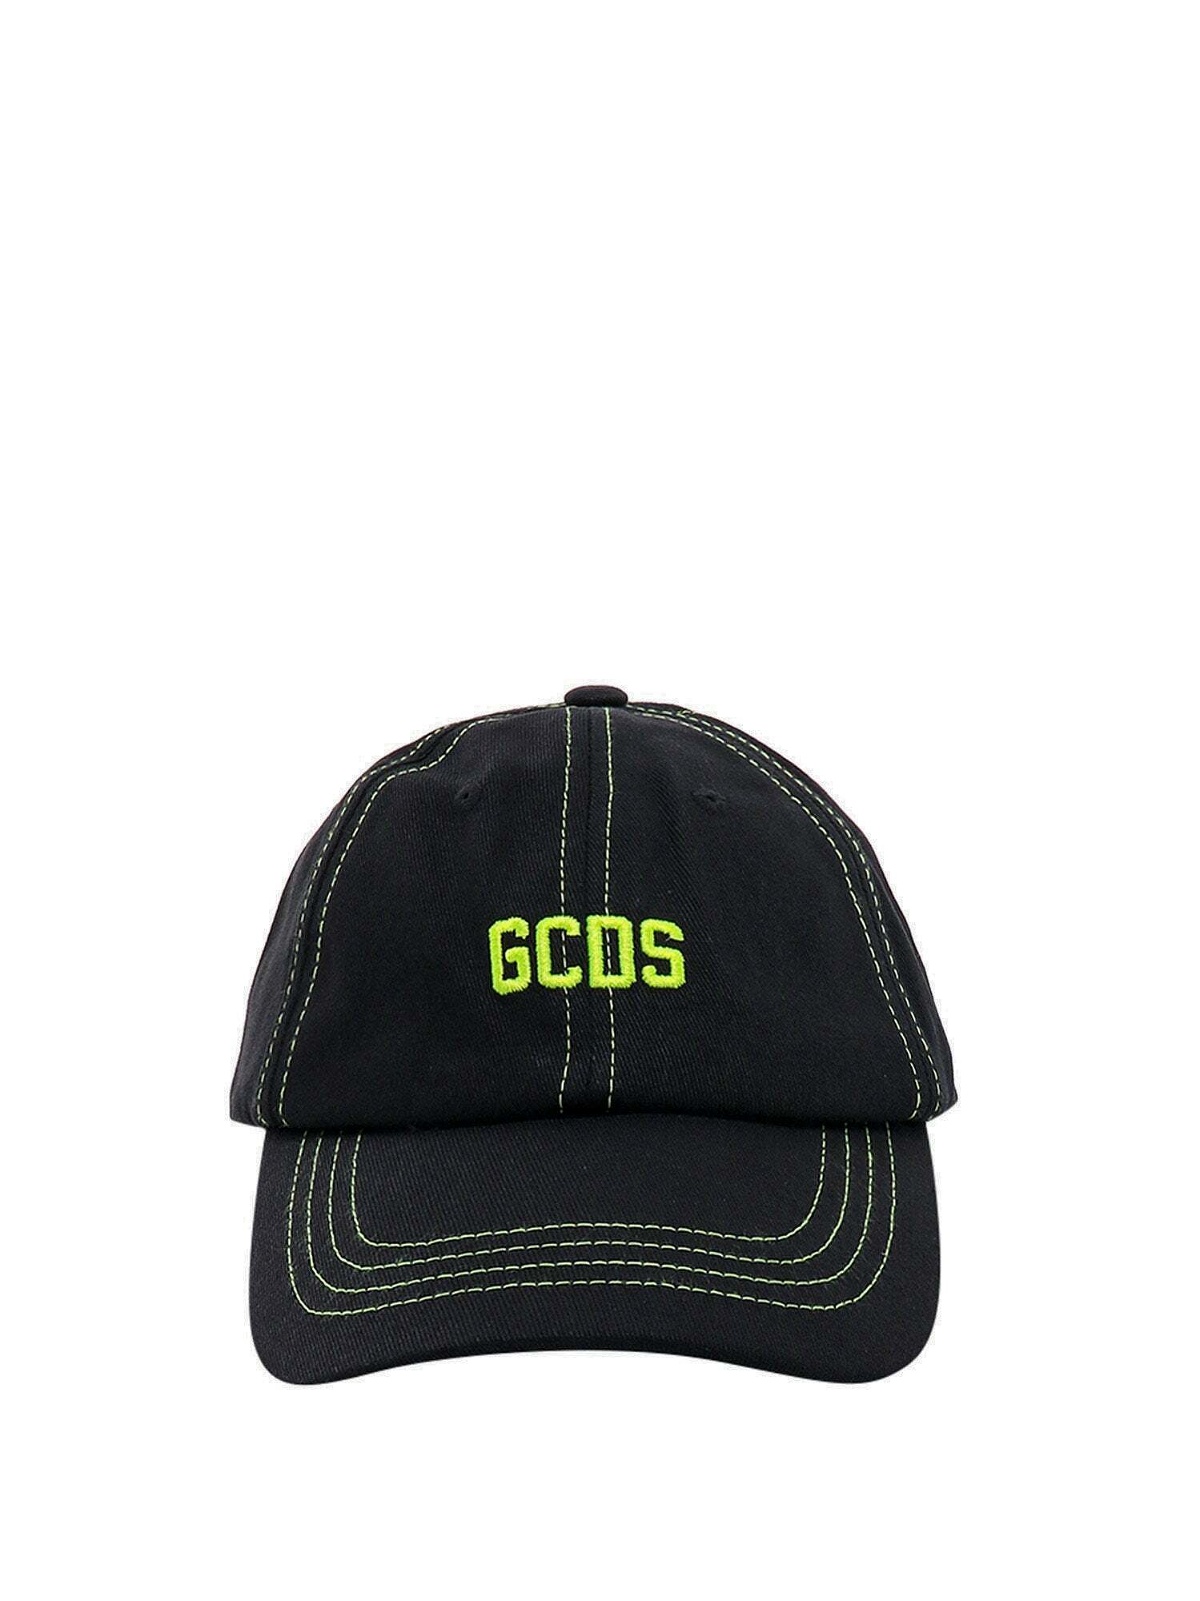 Gcds Hat Black Mens GCDS